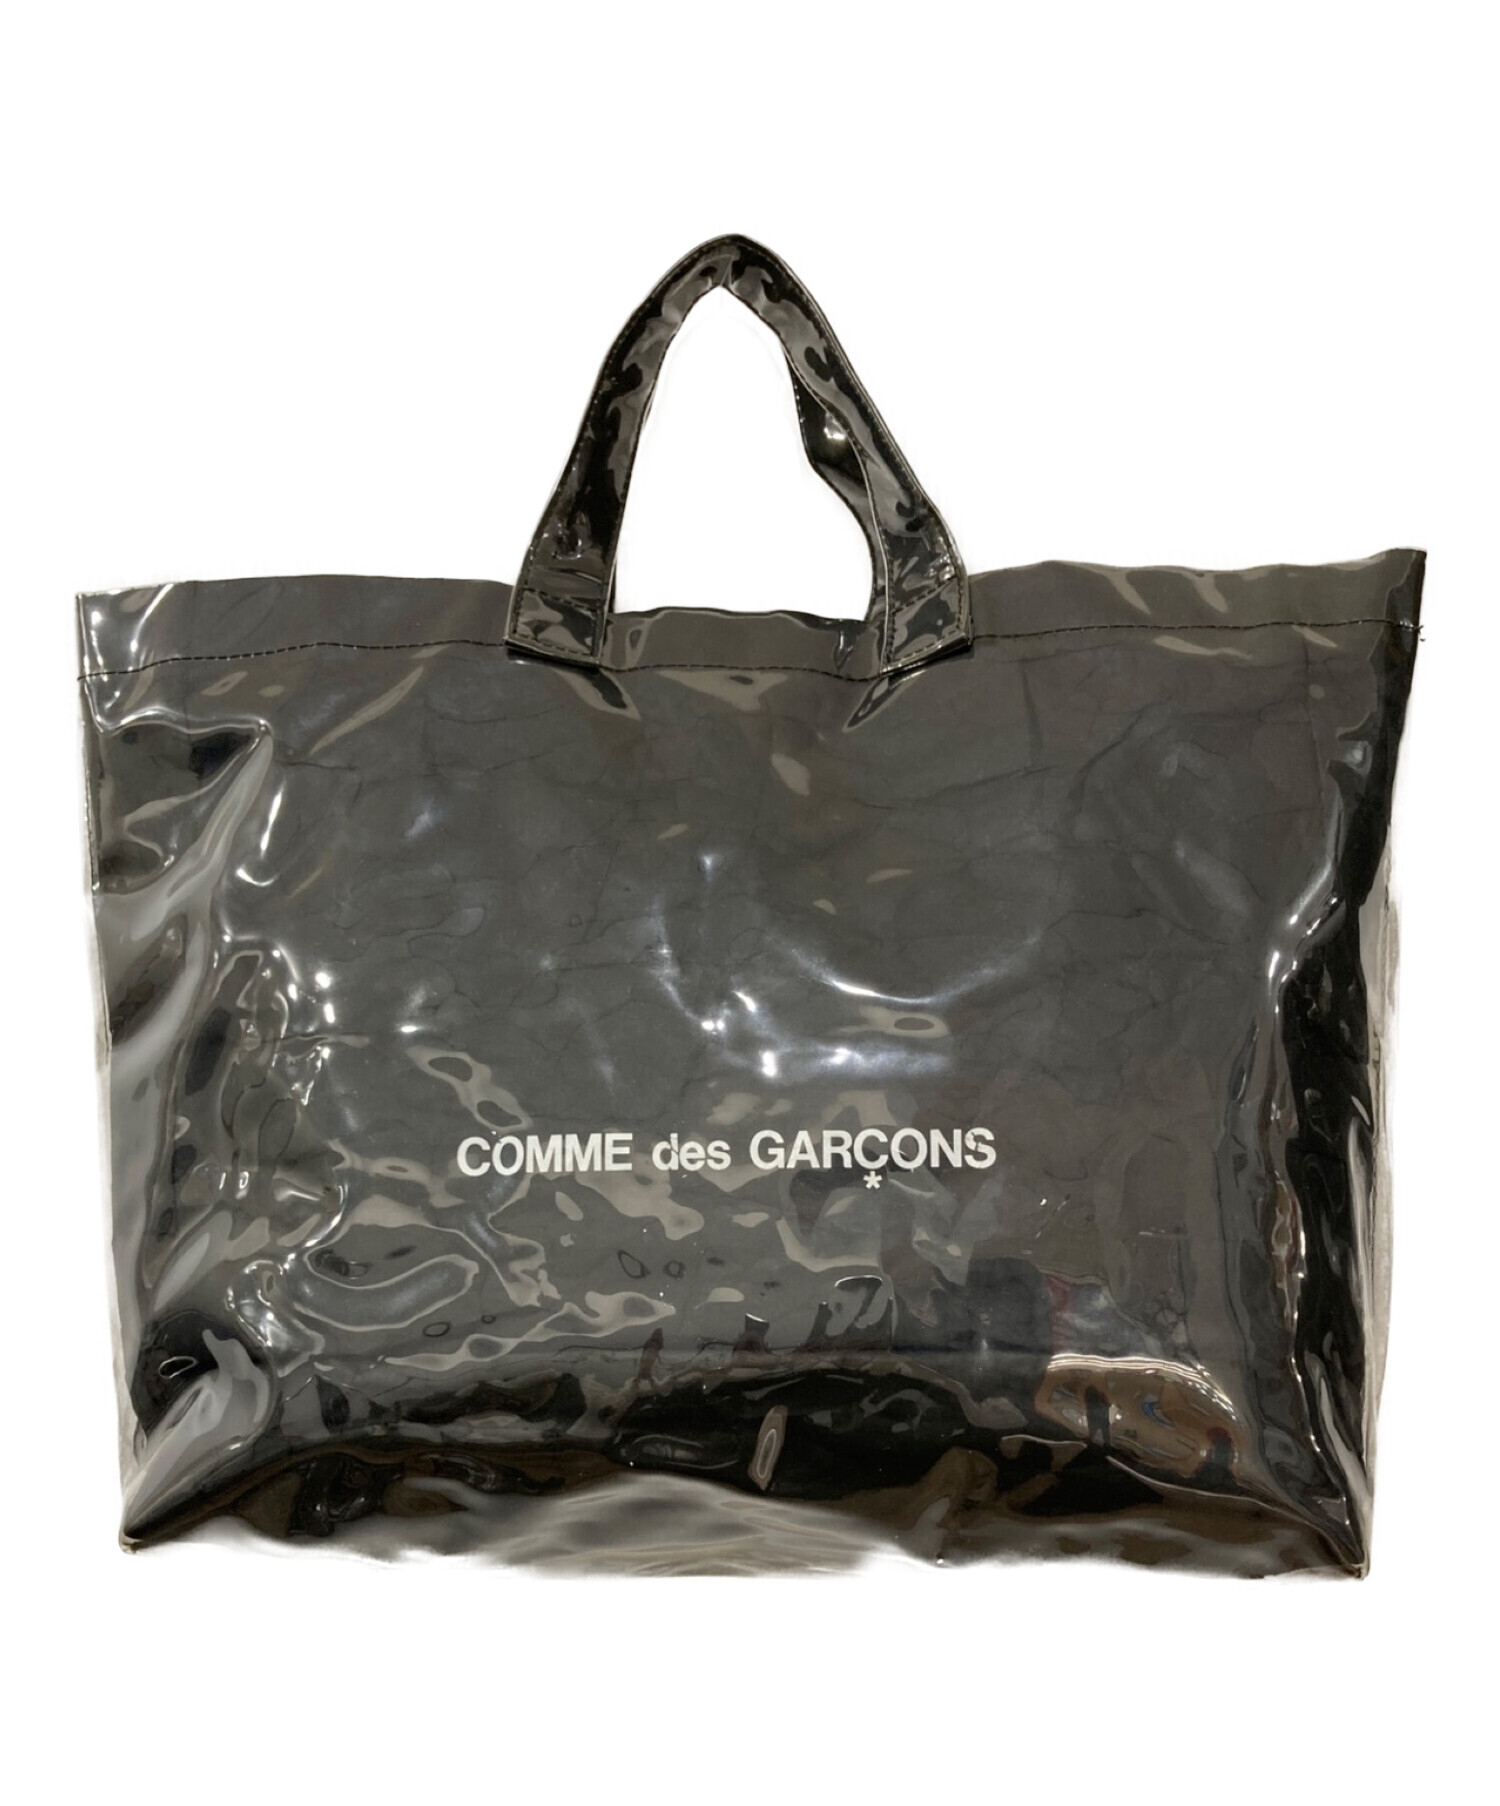 COMME des GARCONS (コムデギャルソン) BLACK MARKET限定トートバッグ ブラック